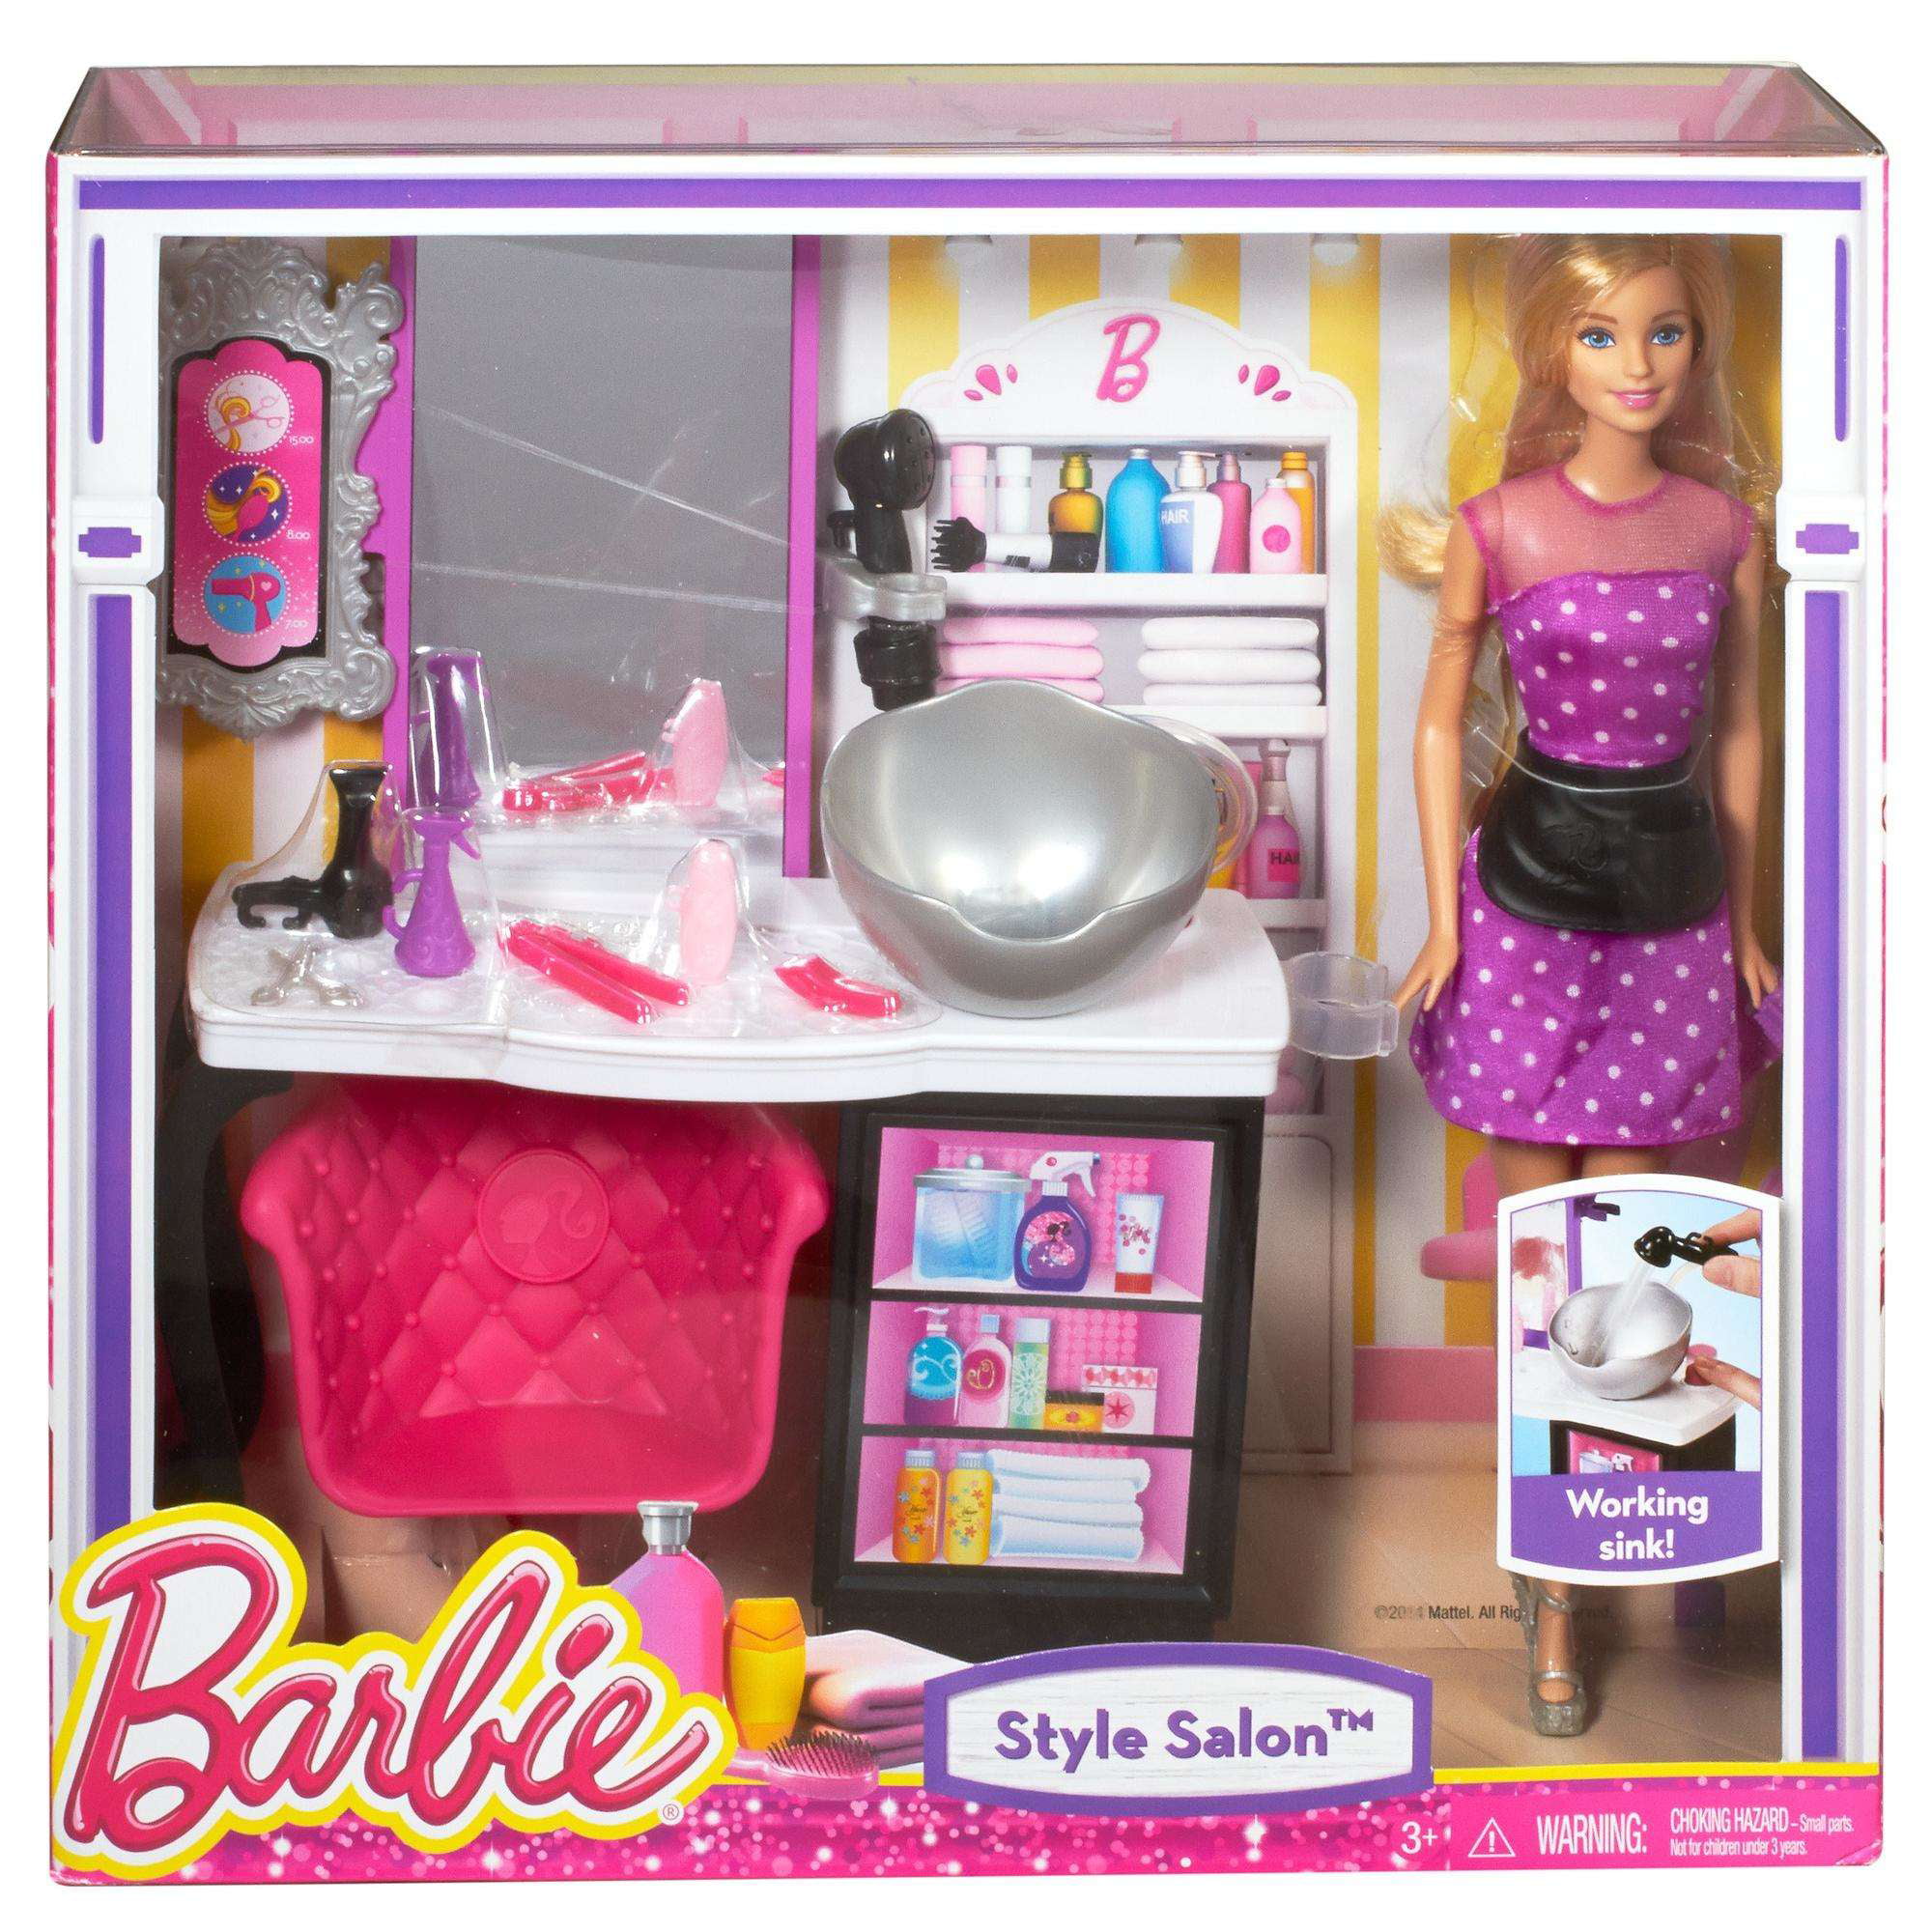 Barbie Malibu Ave Salon with Doll